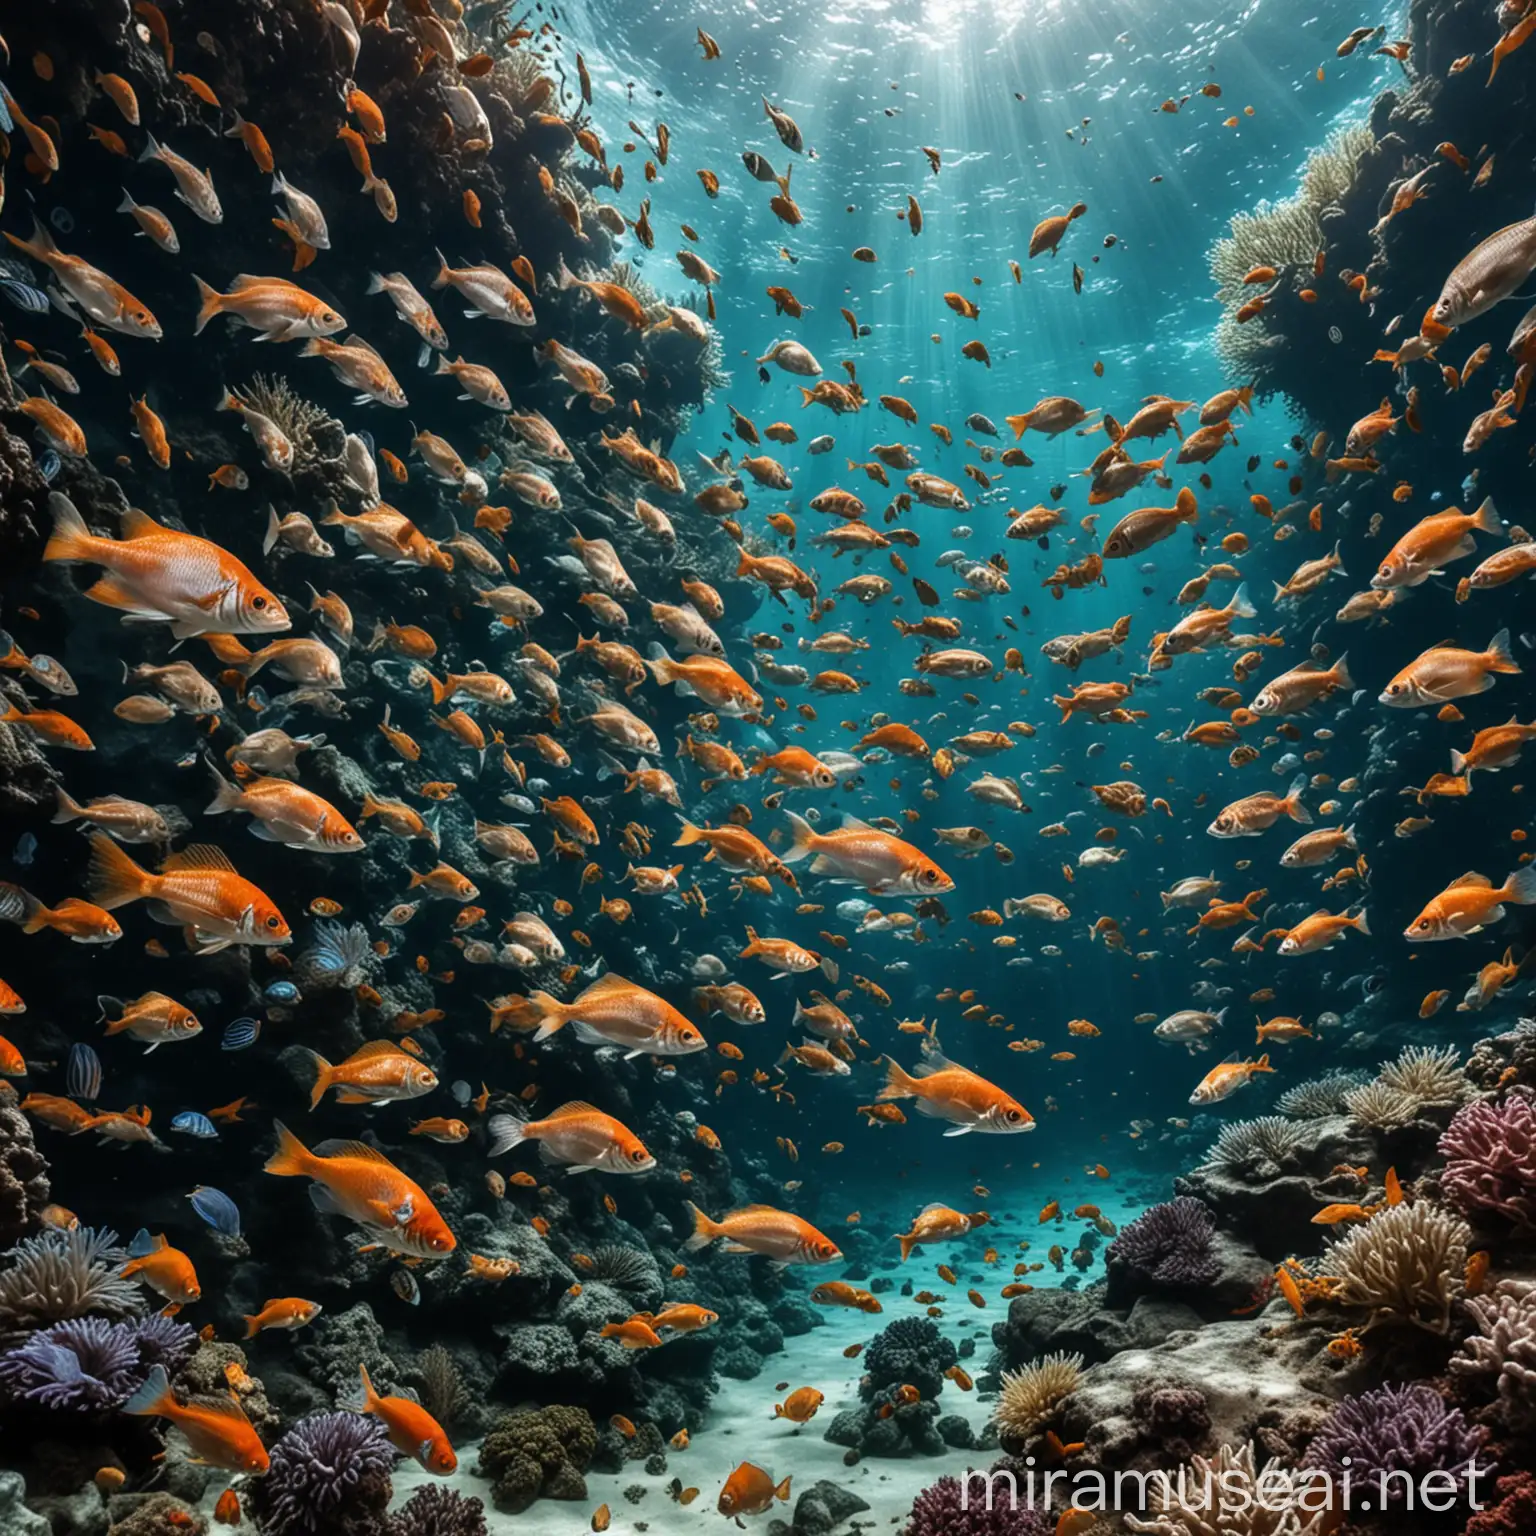 A underwater world full of fish